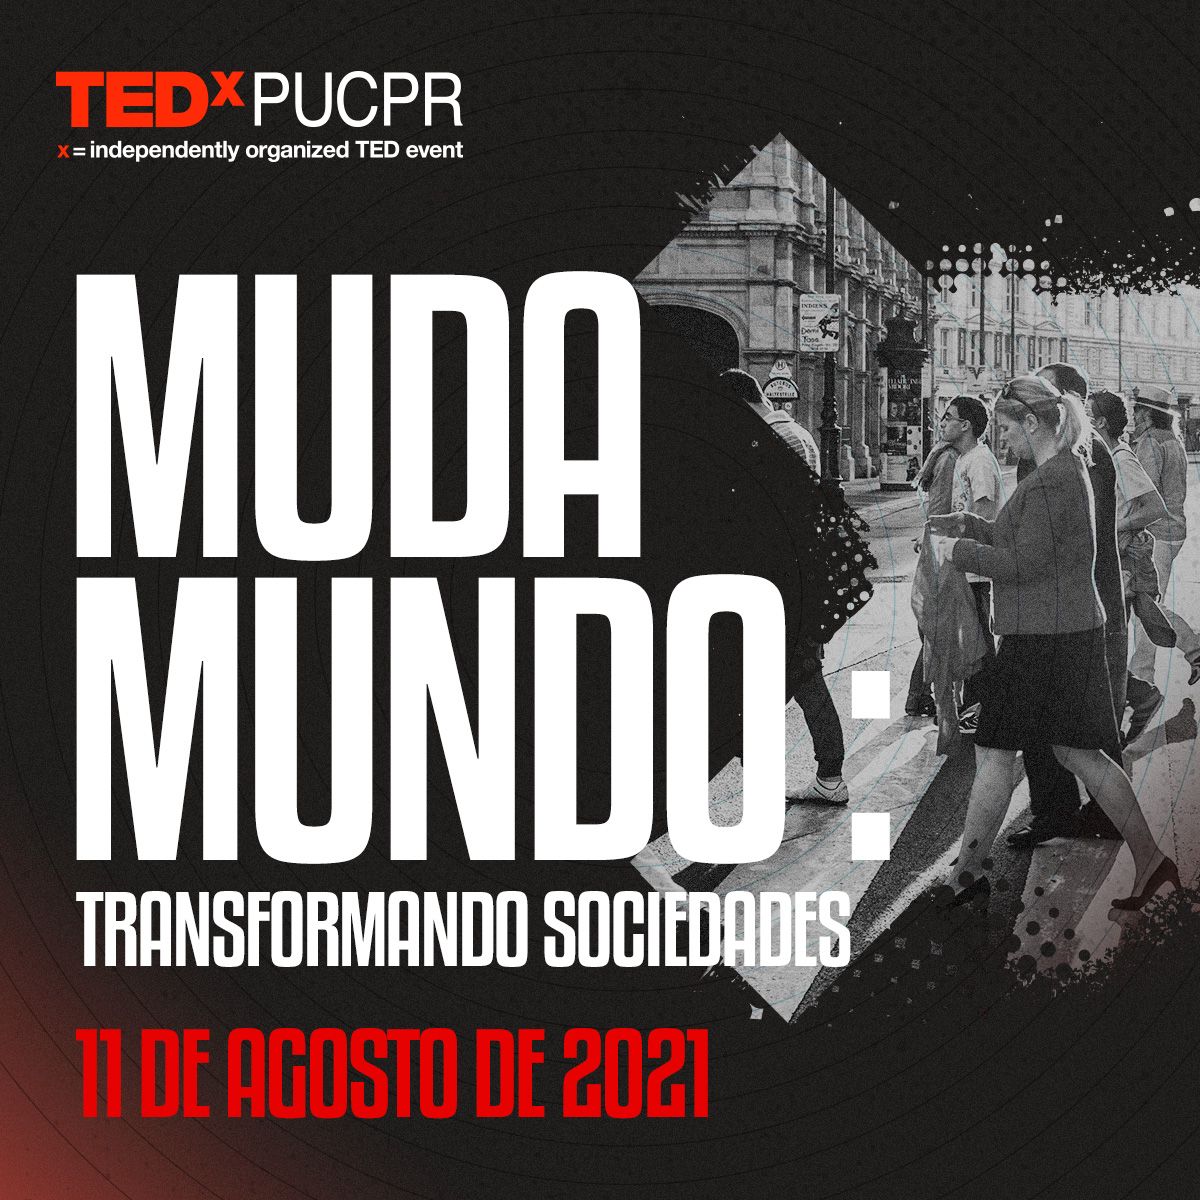 Tedxpucpr